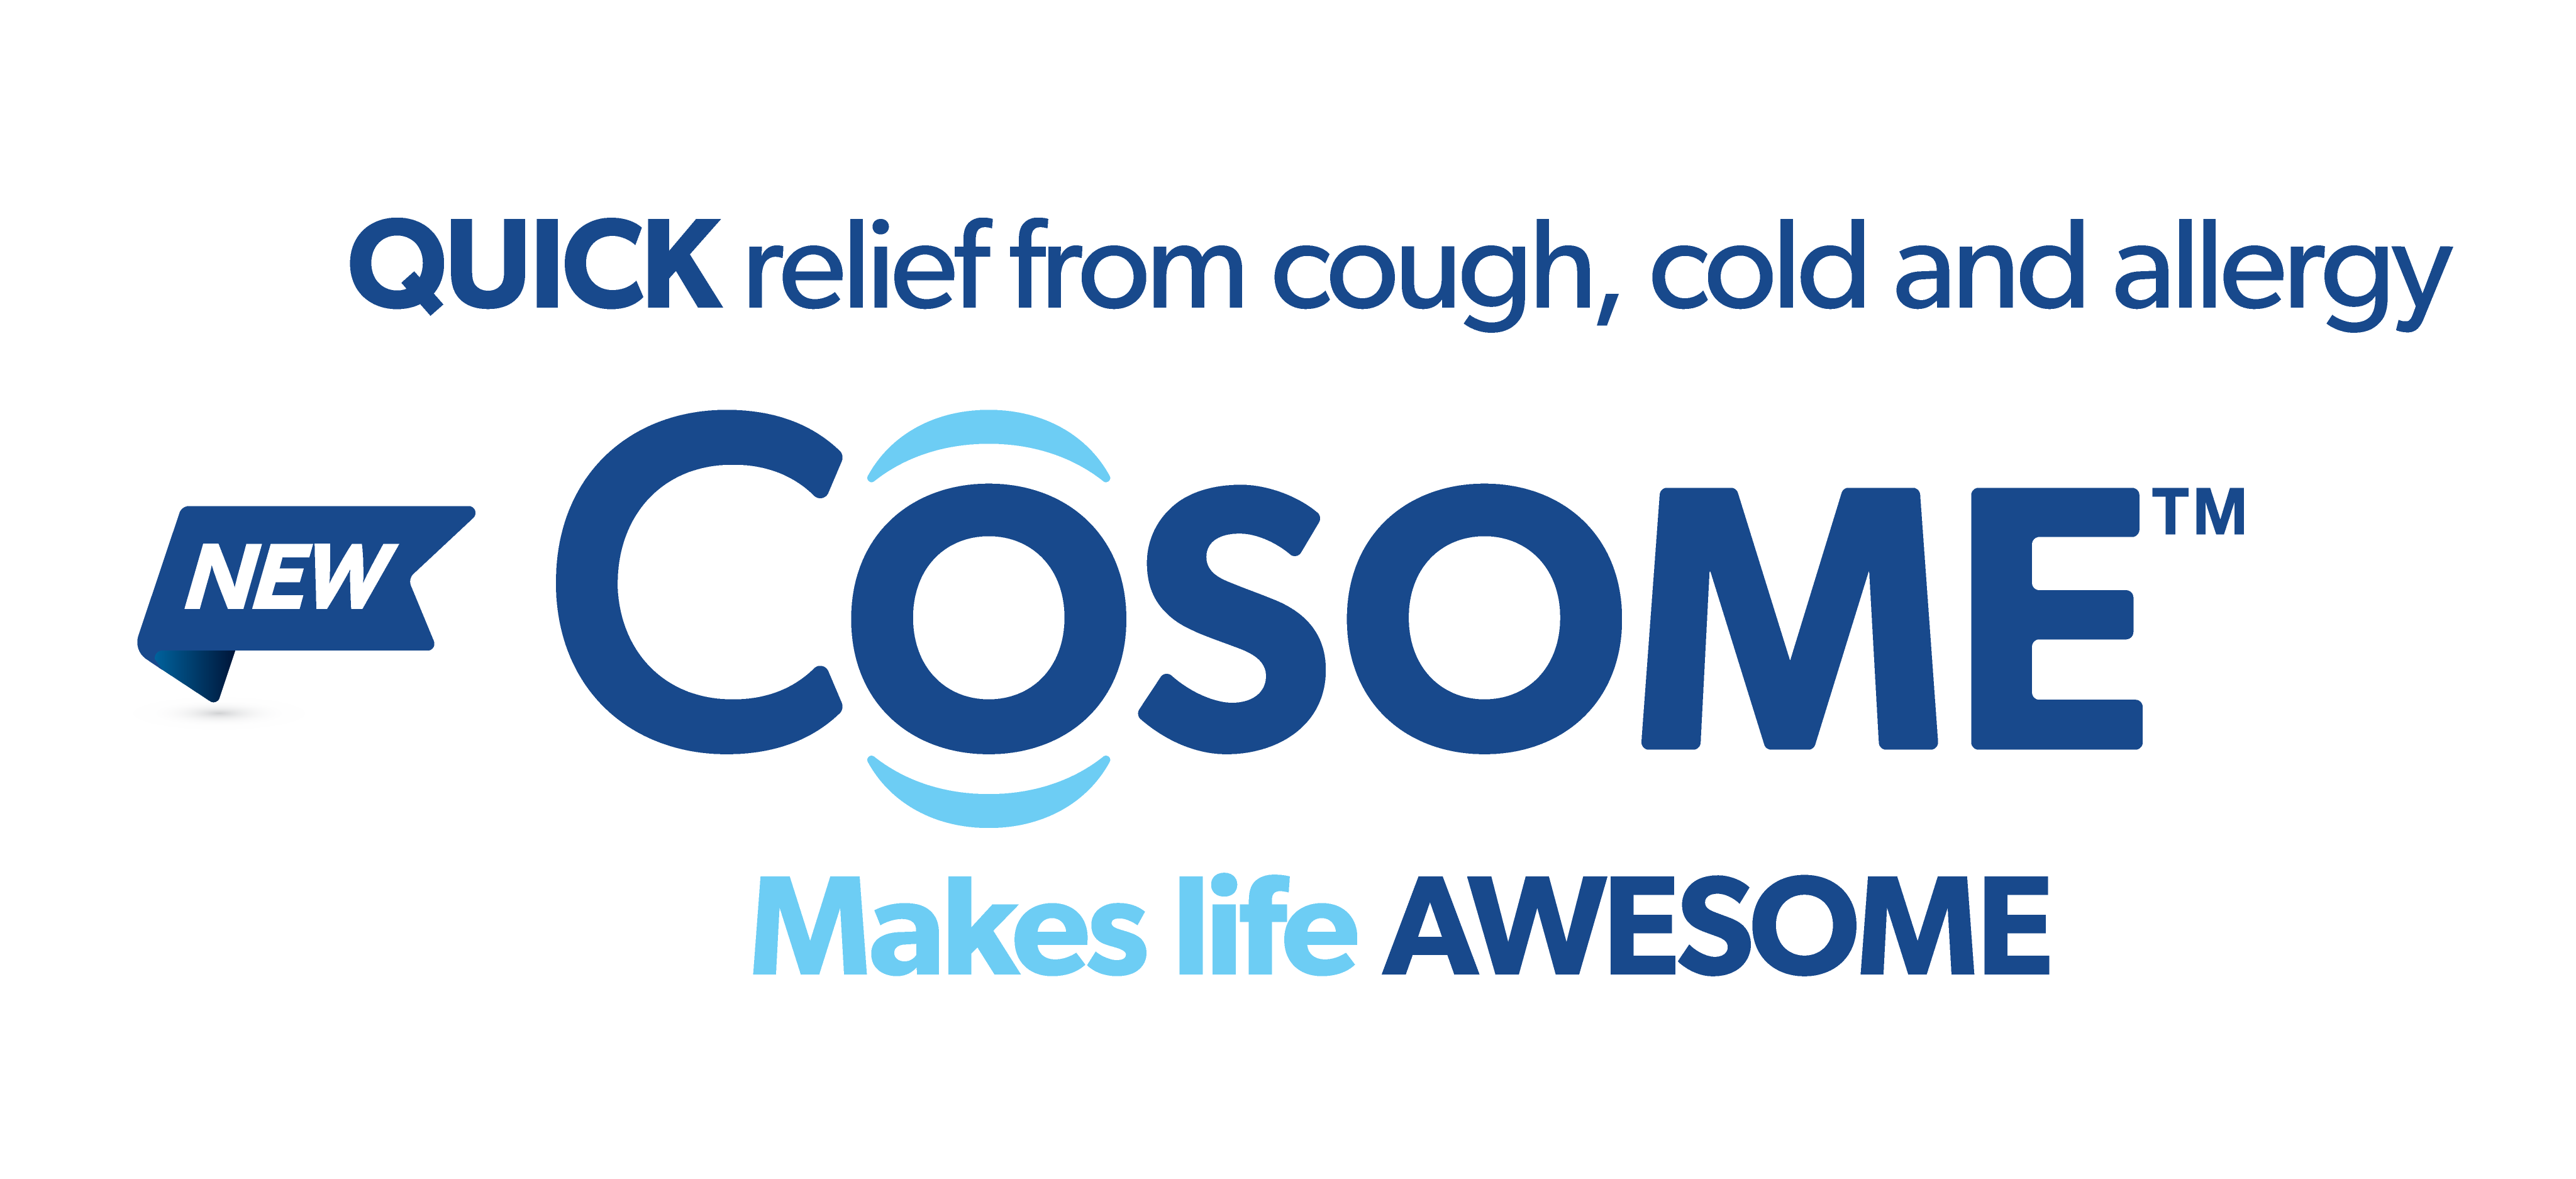 Cosome logo image